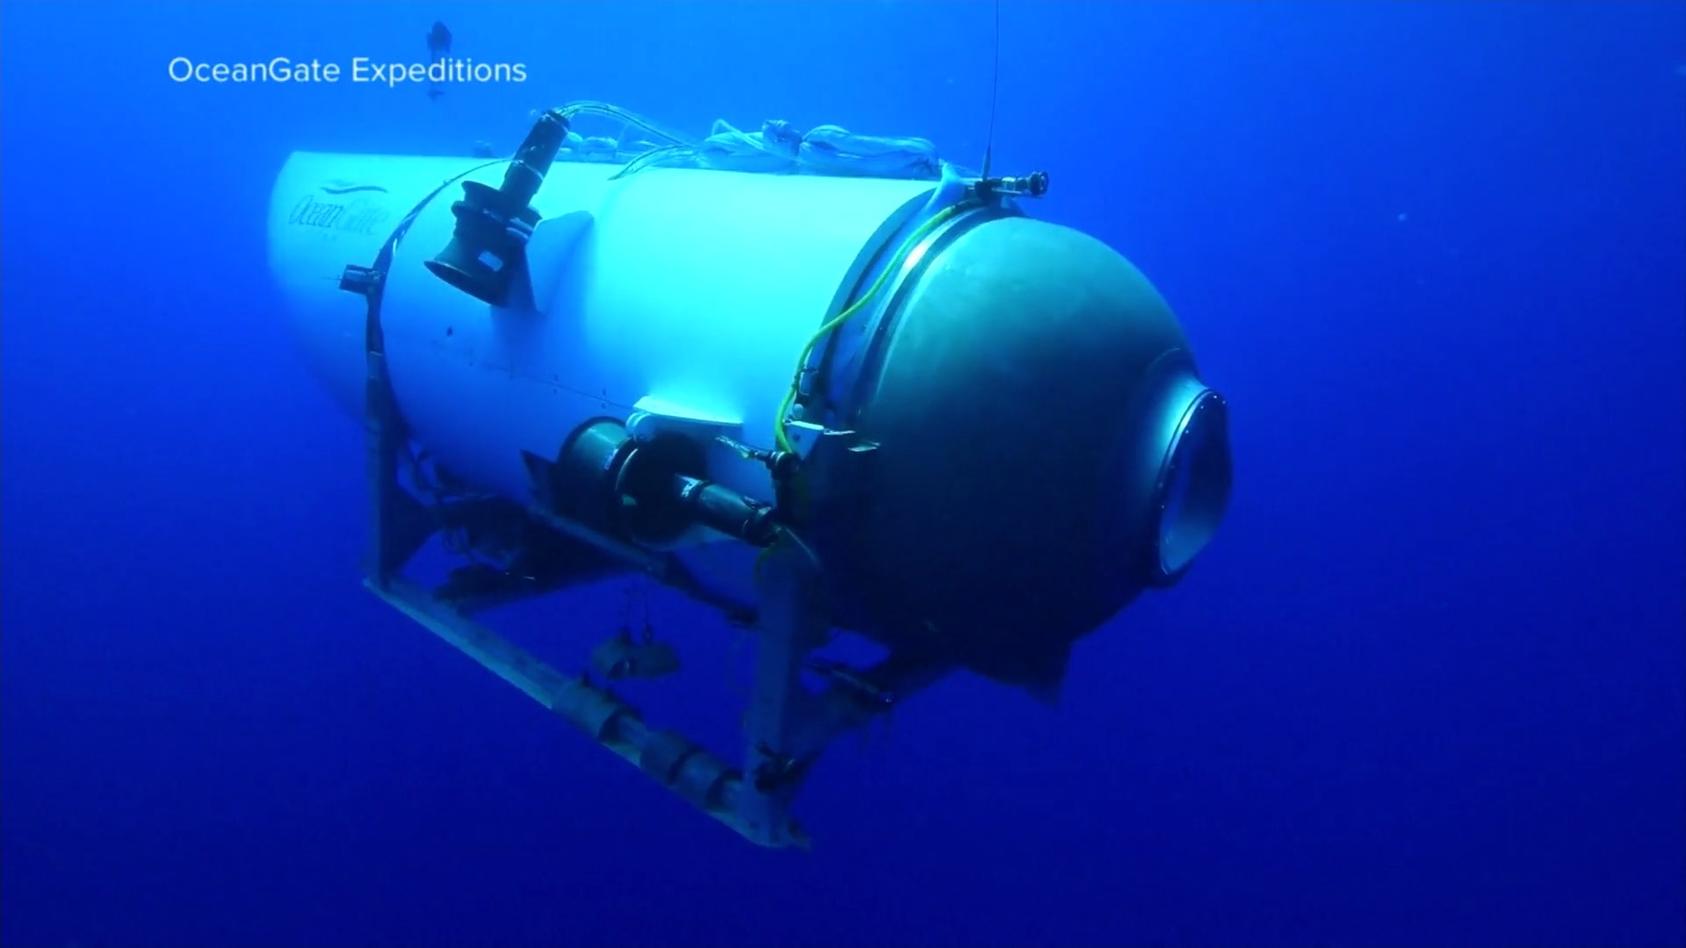 U-Boot in Tiefsee zerstört: „Katastrophale Implosion“, News